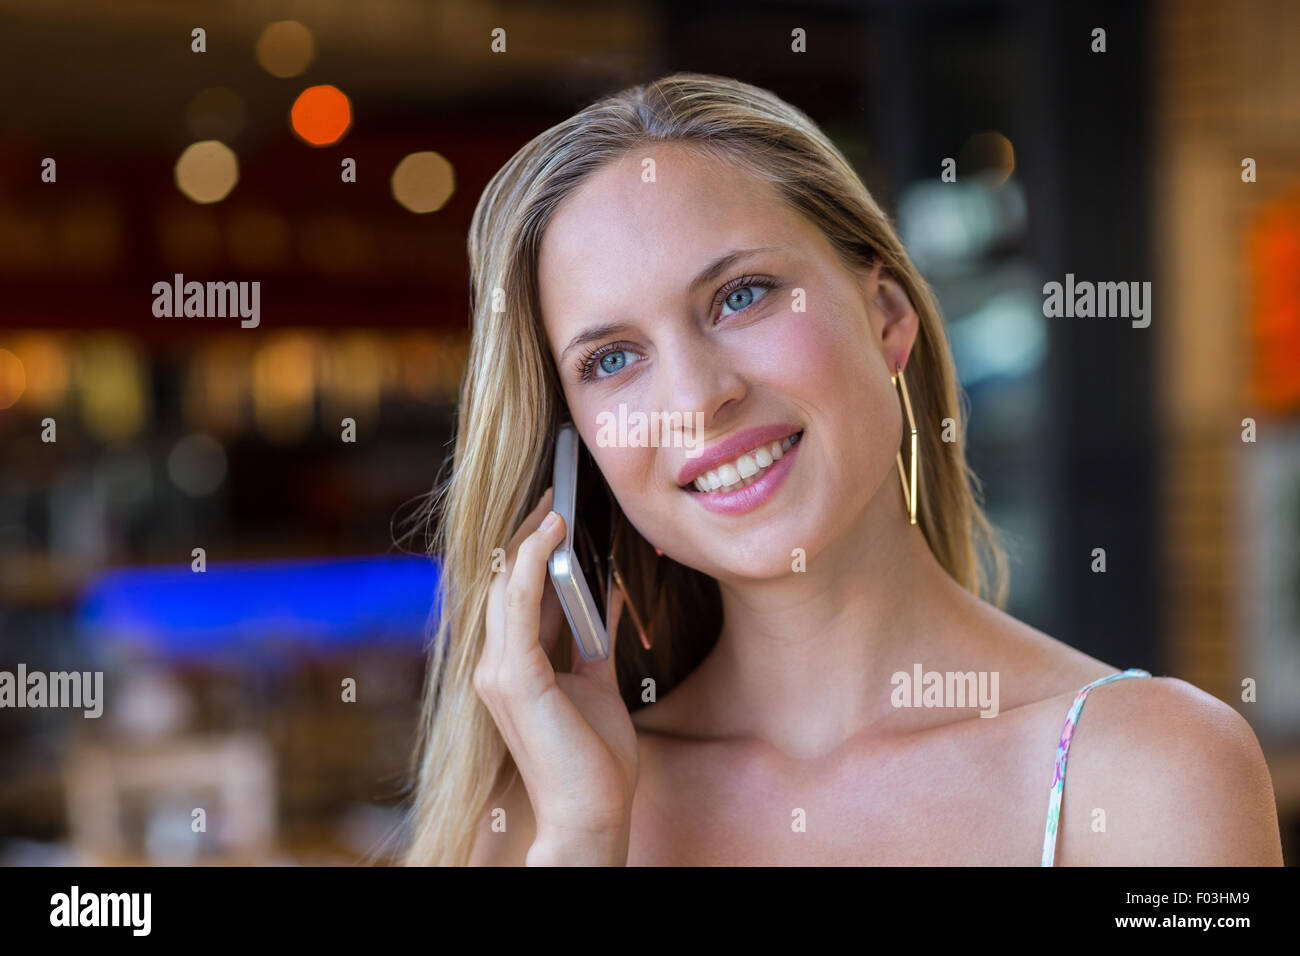 Sorridente donna attraente telefonare con lo smartphone Foto Stock